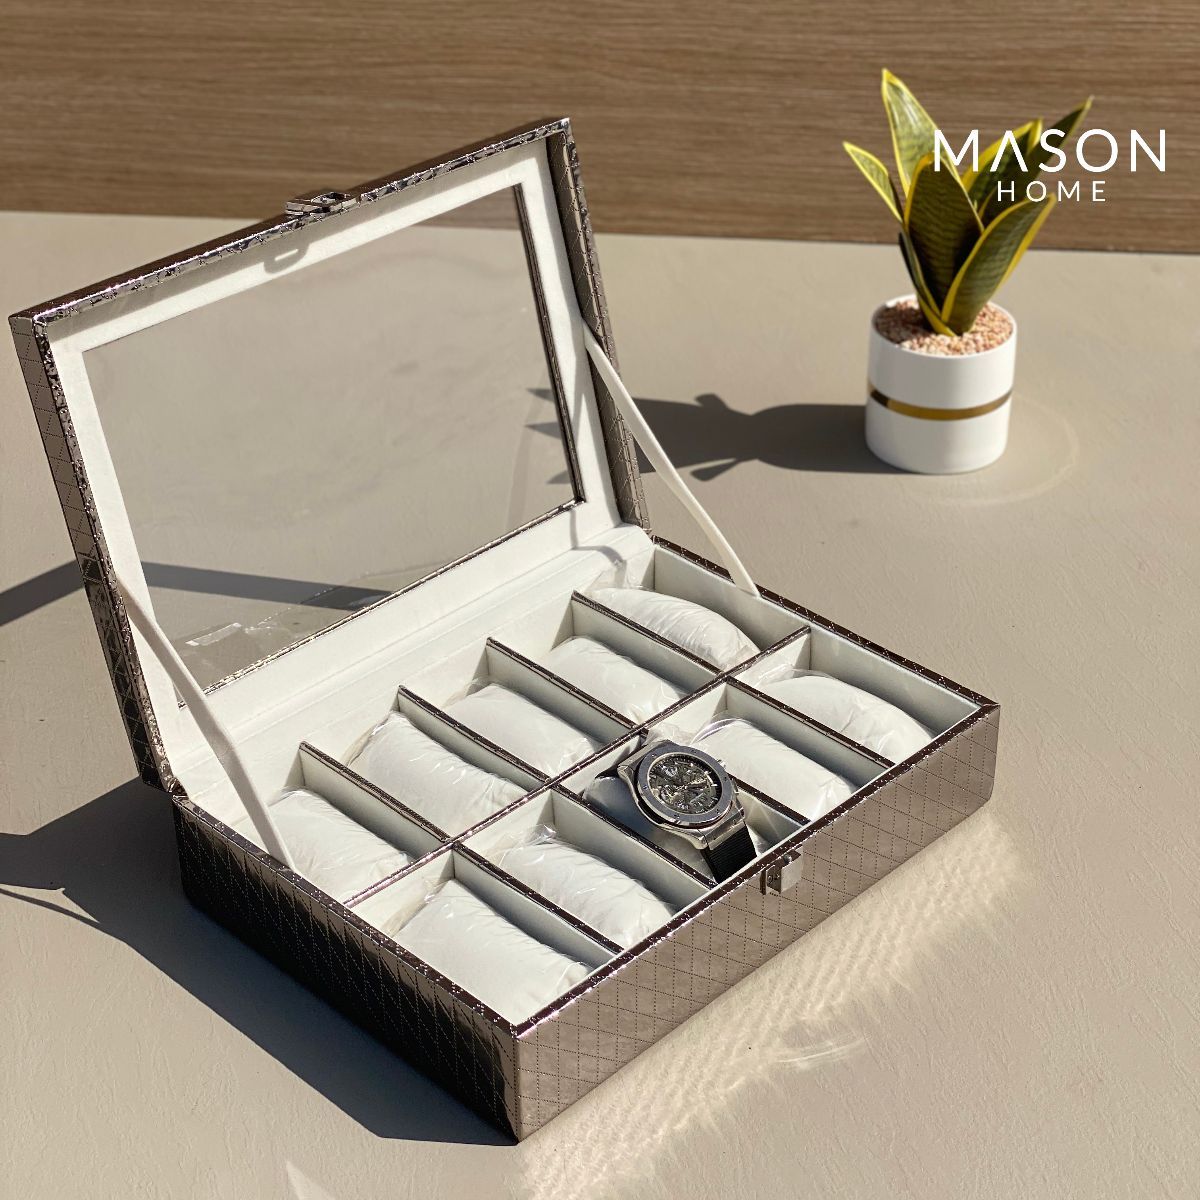 Buy hamilton watch box storage  Mason Home – Mason Home by Amarsons -  Lifestyle & Decor